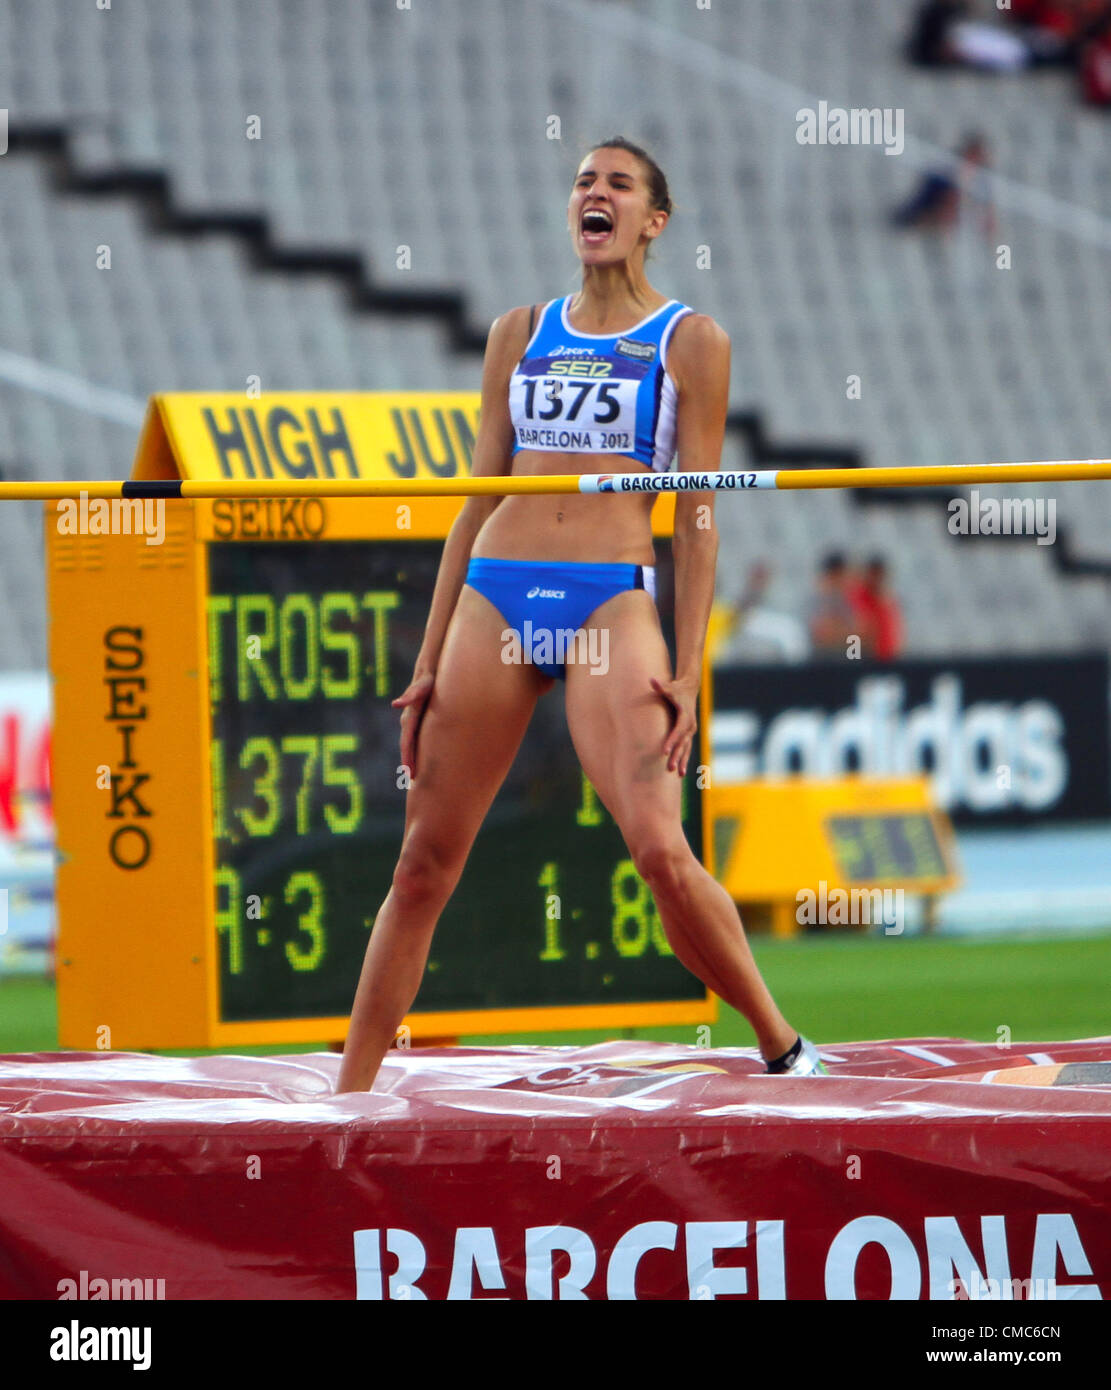 15 July 2012 - Barcelona - High jumper Alessia Trost win high jump on IAAF World Junior Championships Stock Photo